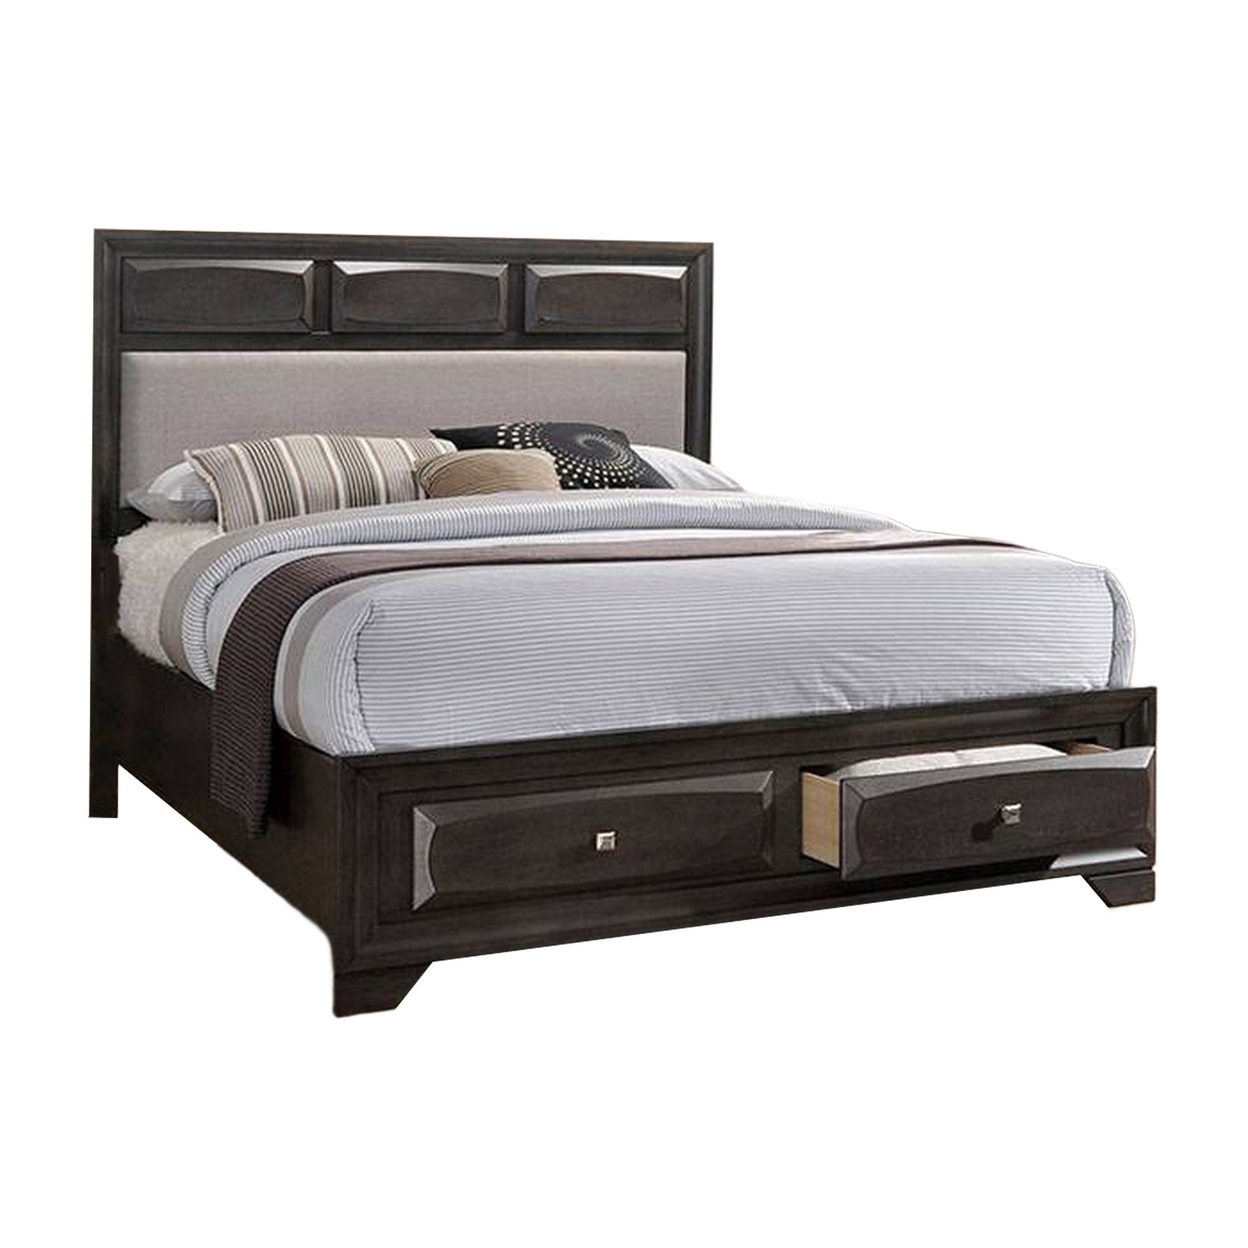 Kevi Queen Size Bed, Beige Fabric Upholstered Headboard, Storage, Oak Gray- Saltoro Sherpi